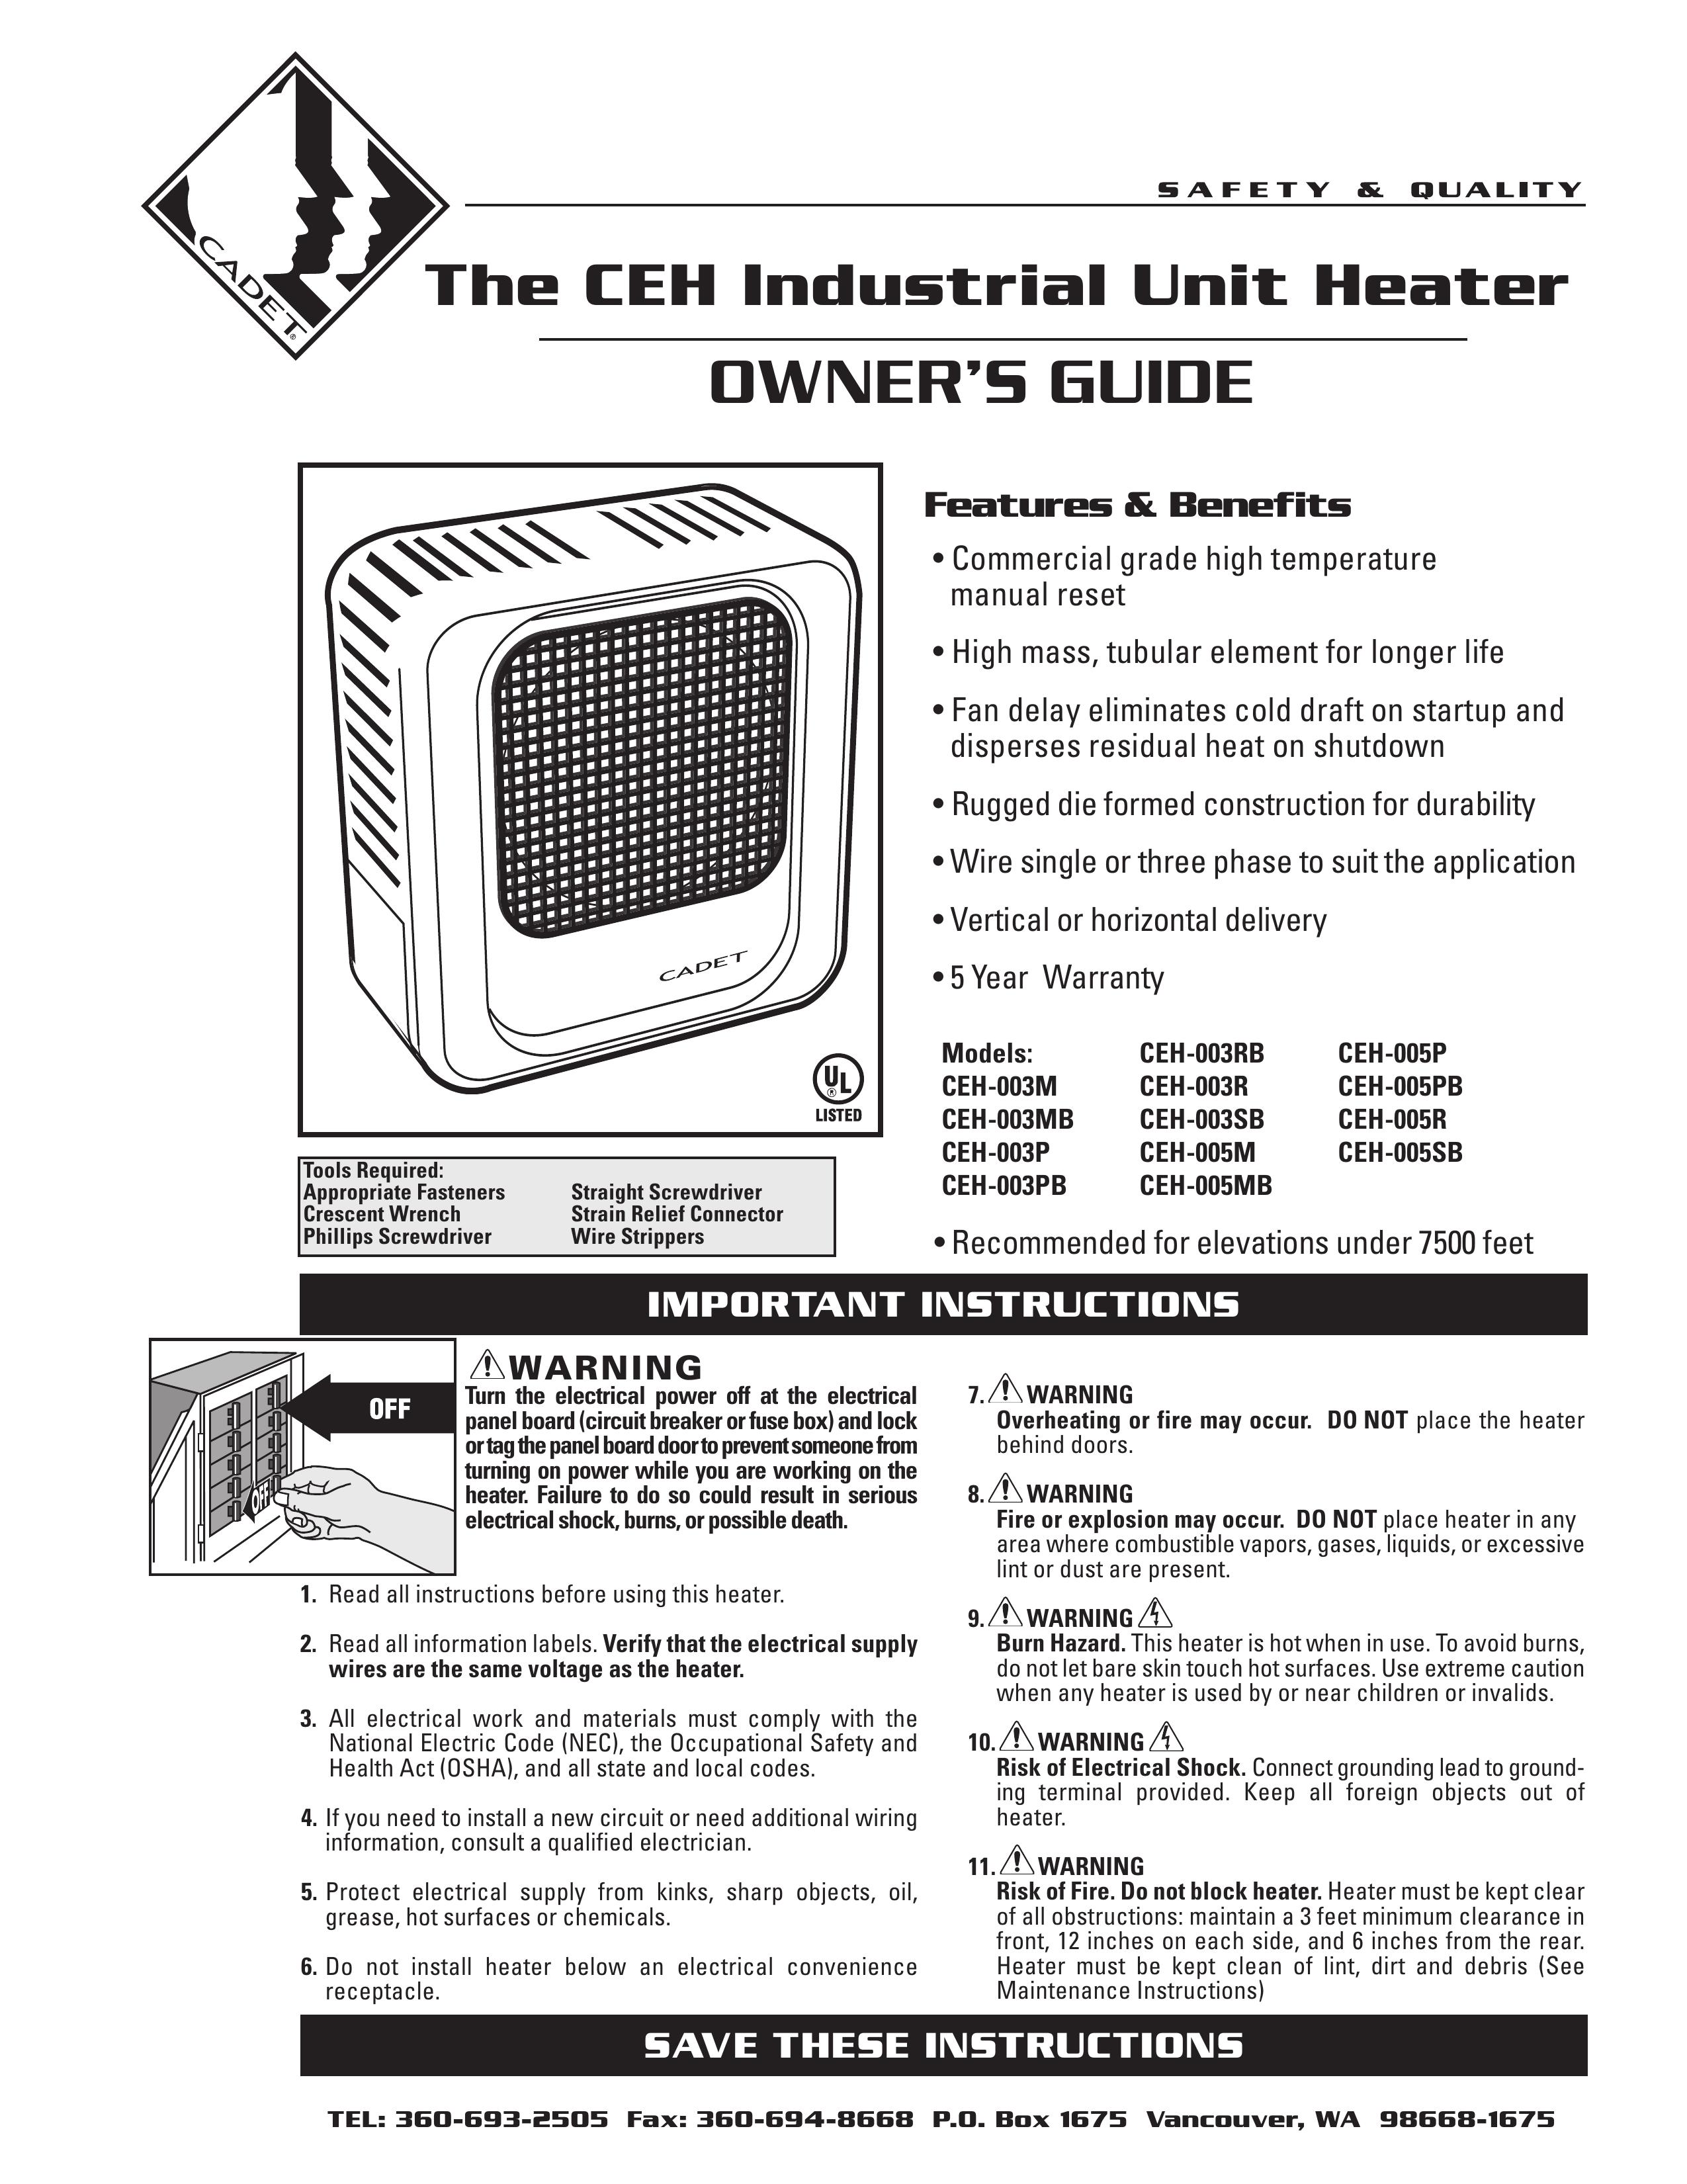 Cadet CEH-003PB Patio Heater User Manual